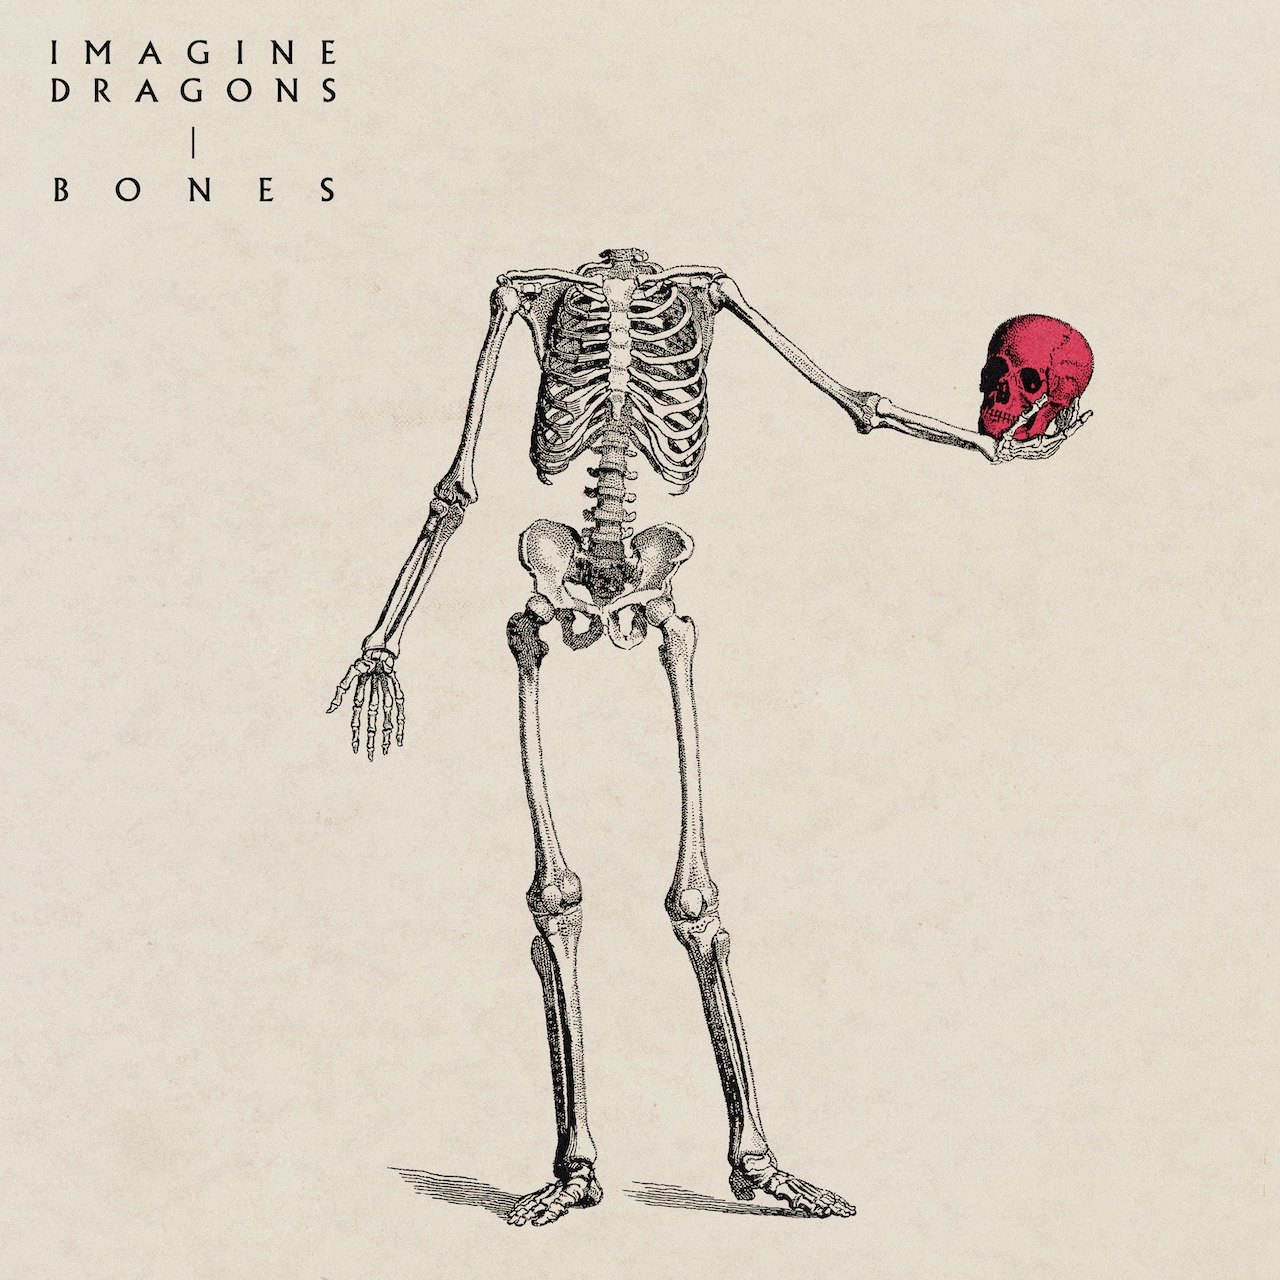 Listen To Imagine Dragons' New Single, 'Bones'